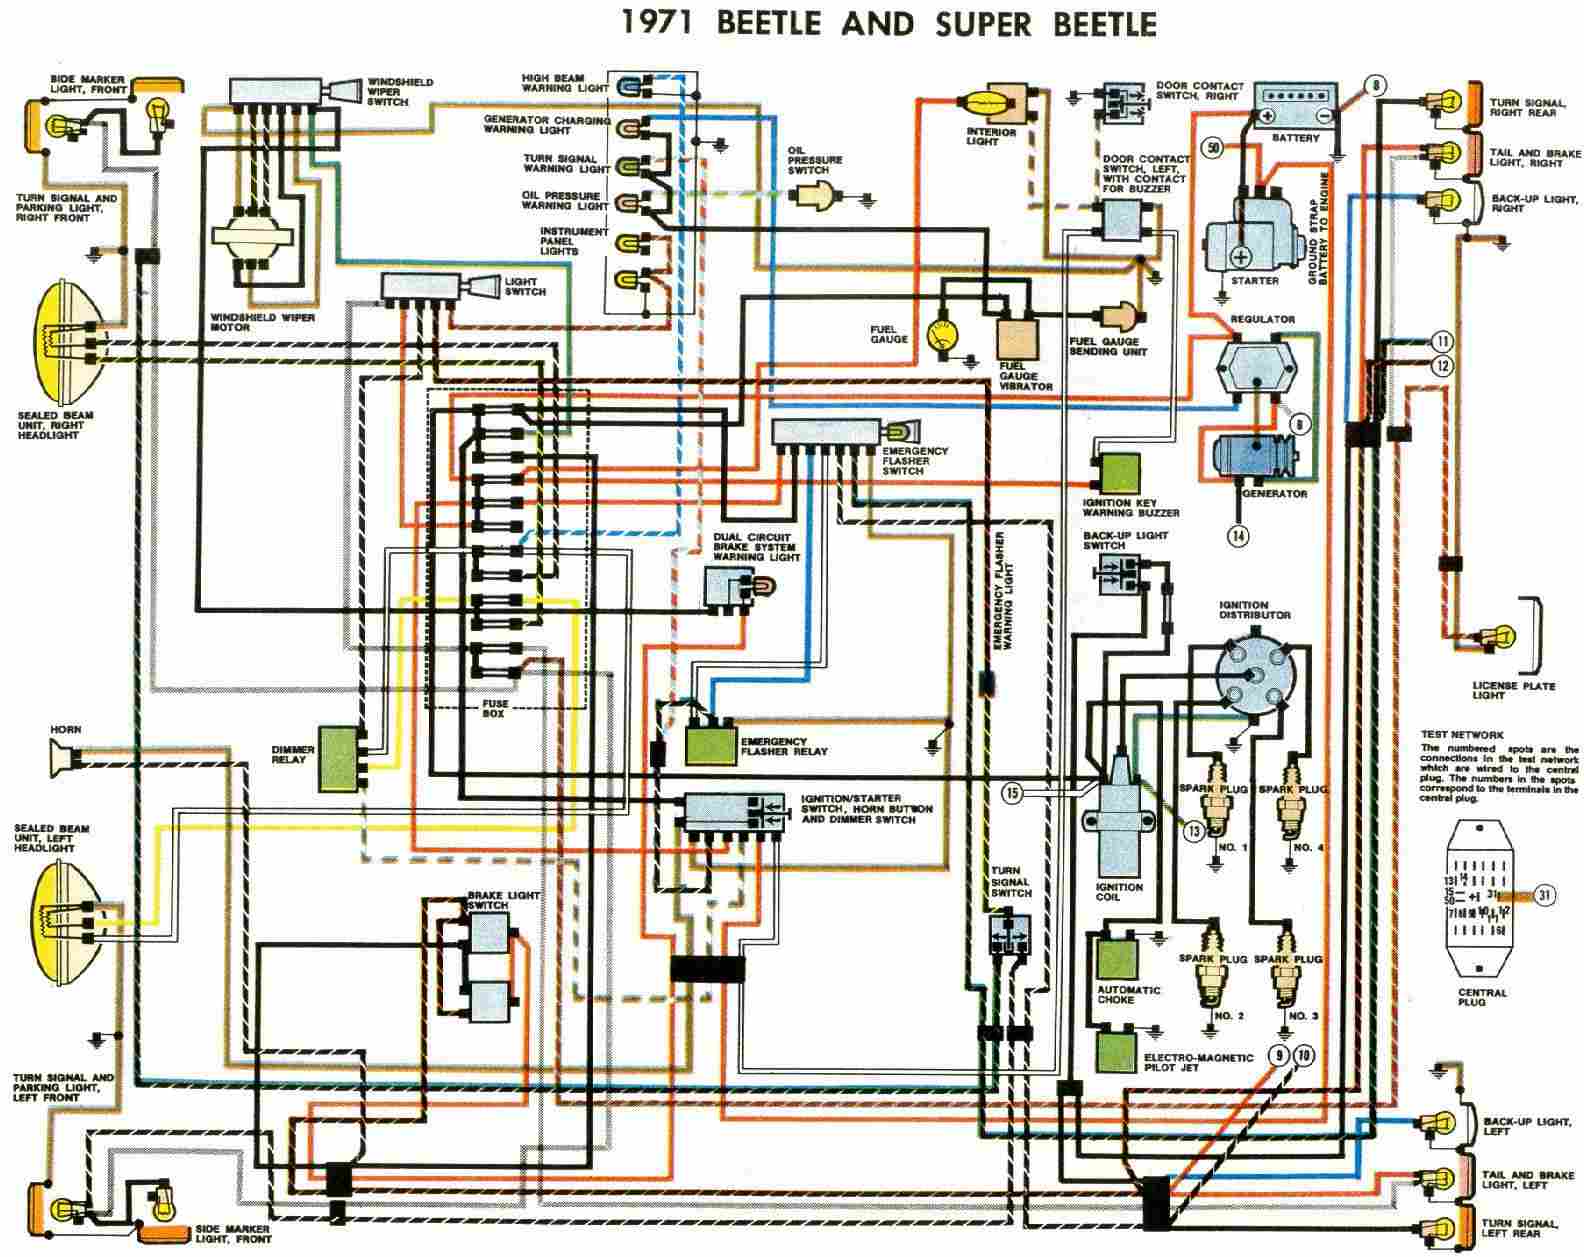 Wiring diagram clipart - Clipground arti wiring diagram 